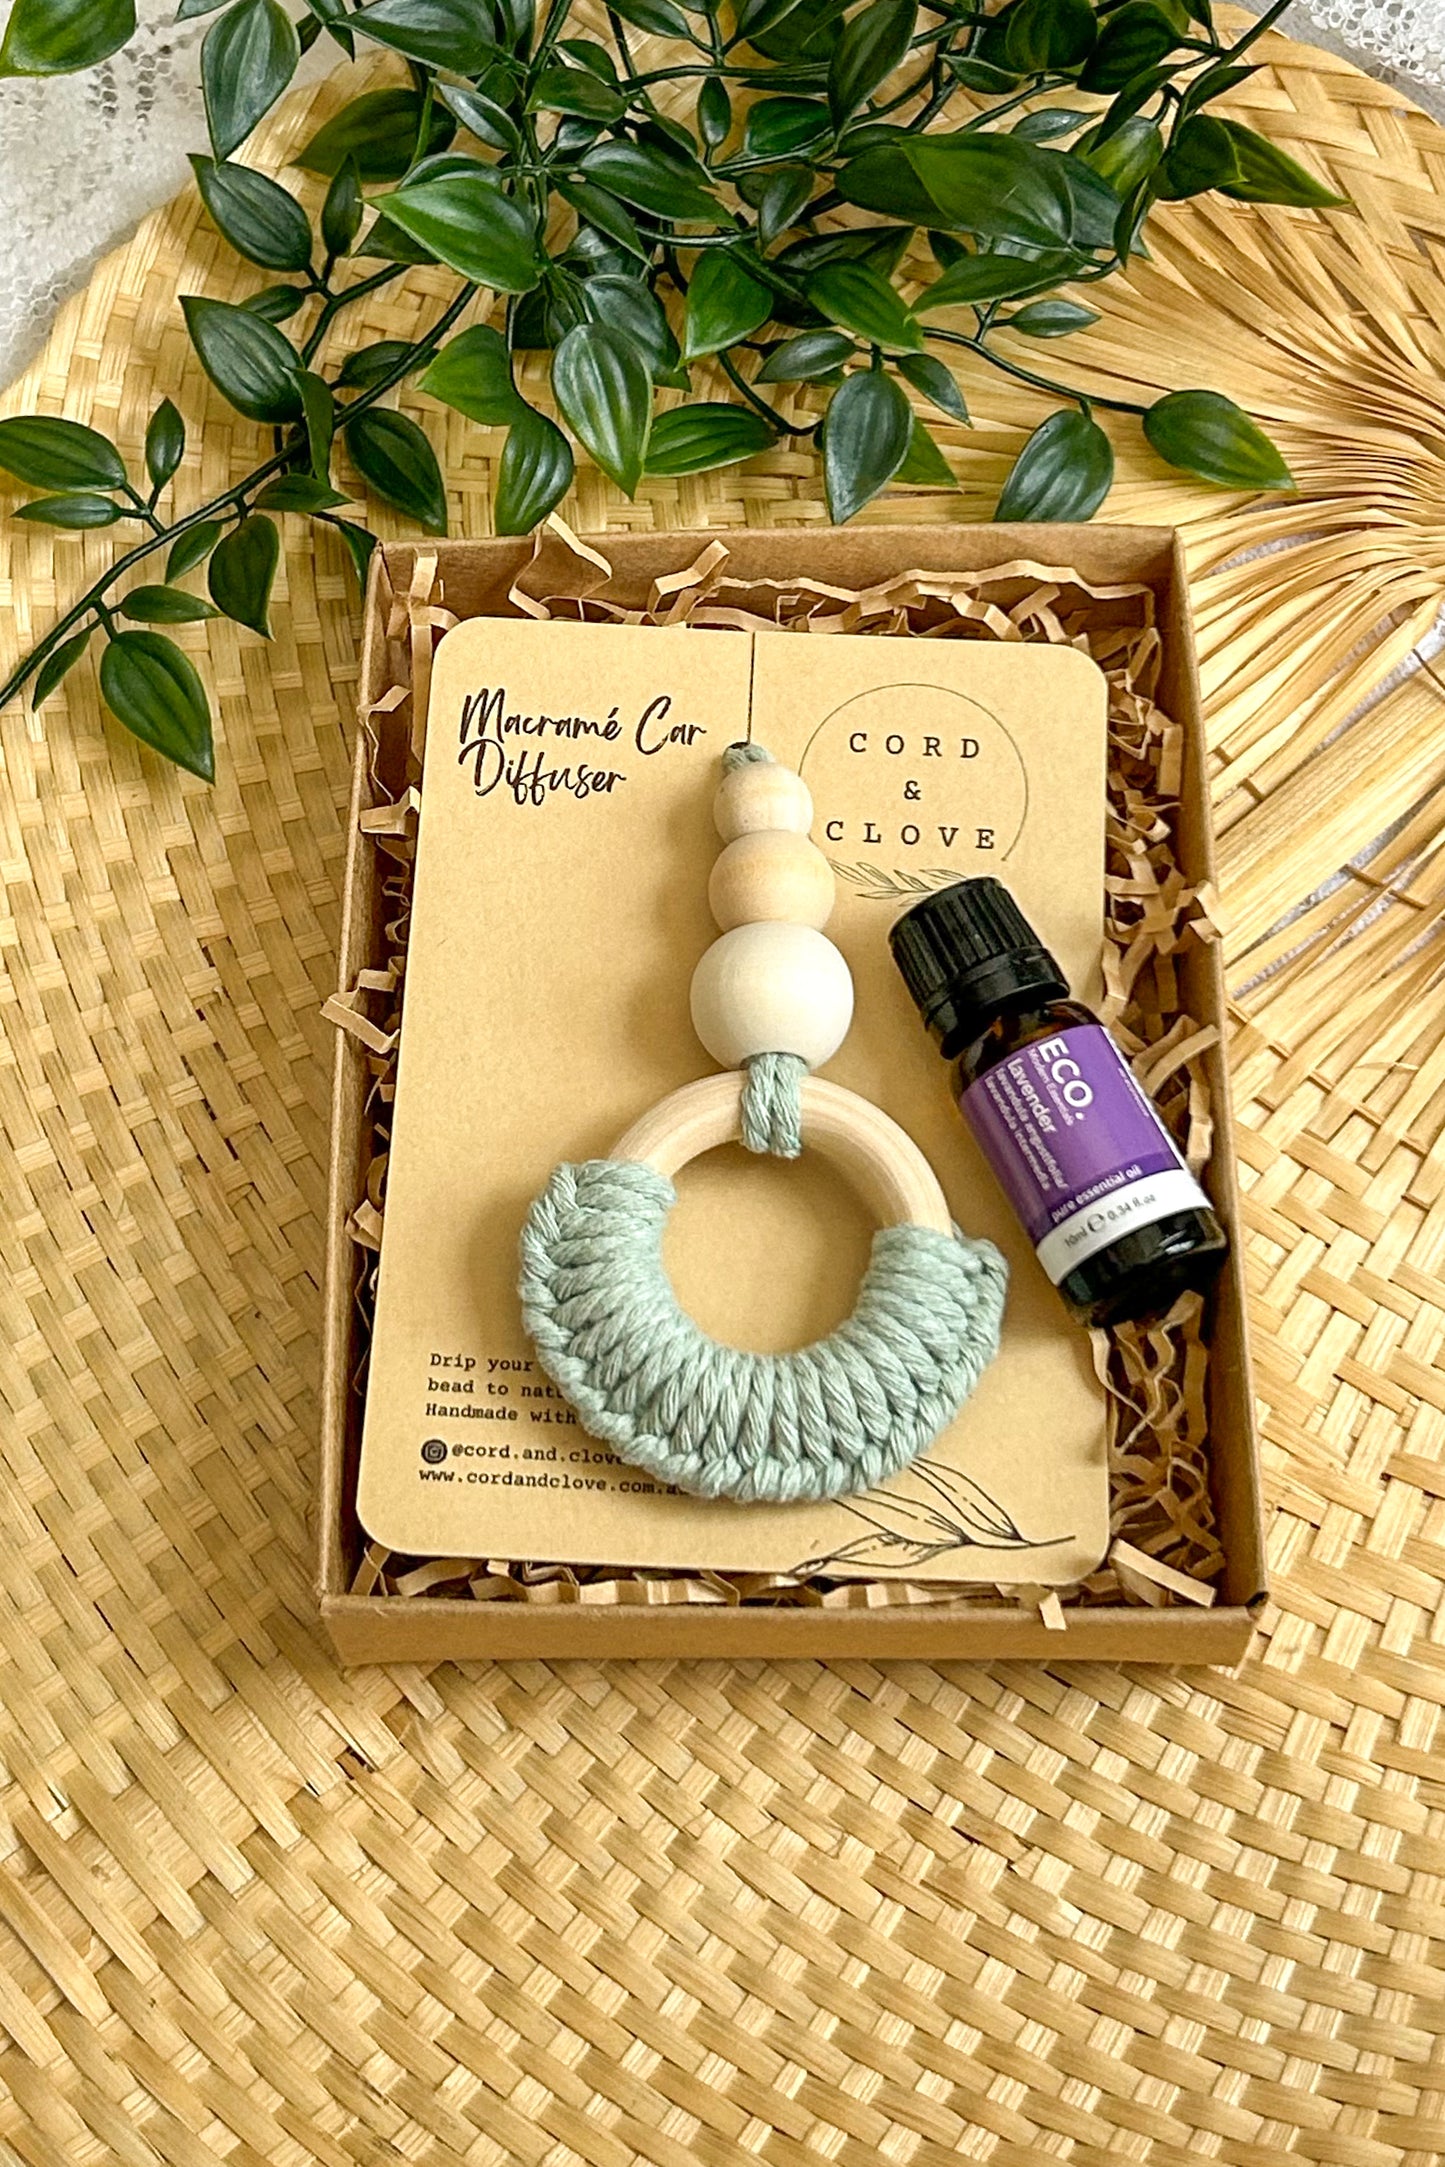 NEW! Essential Oil Diffuser Gift Set - Lavender